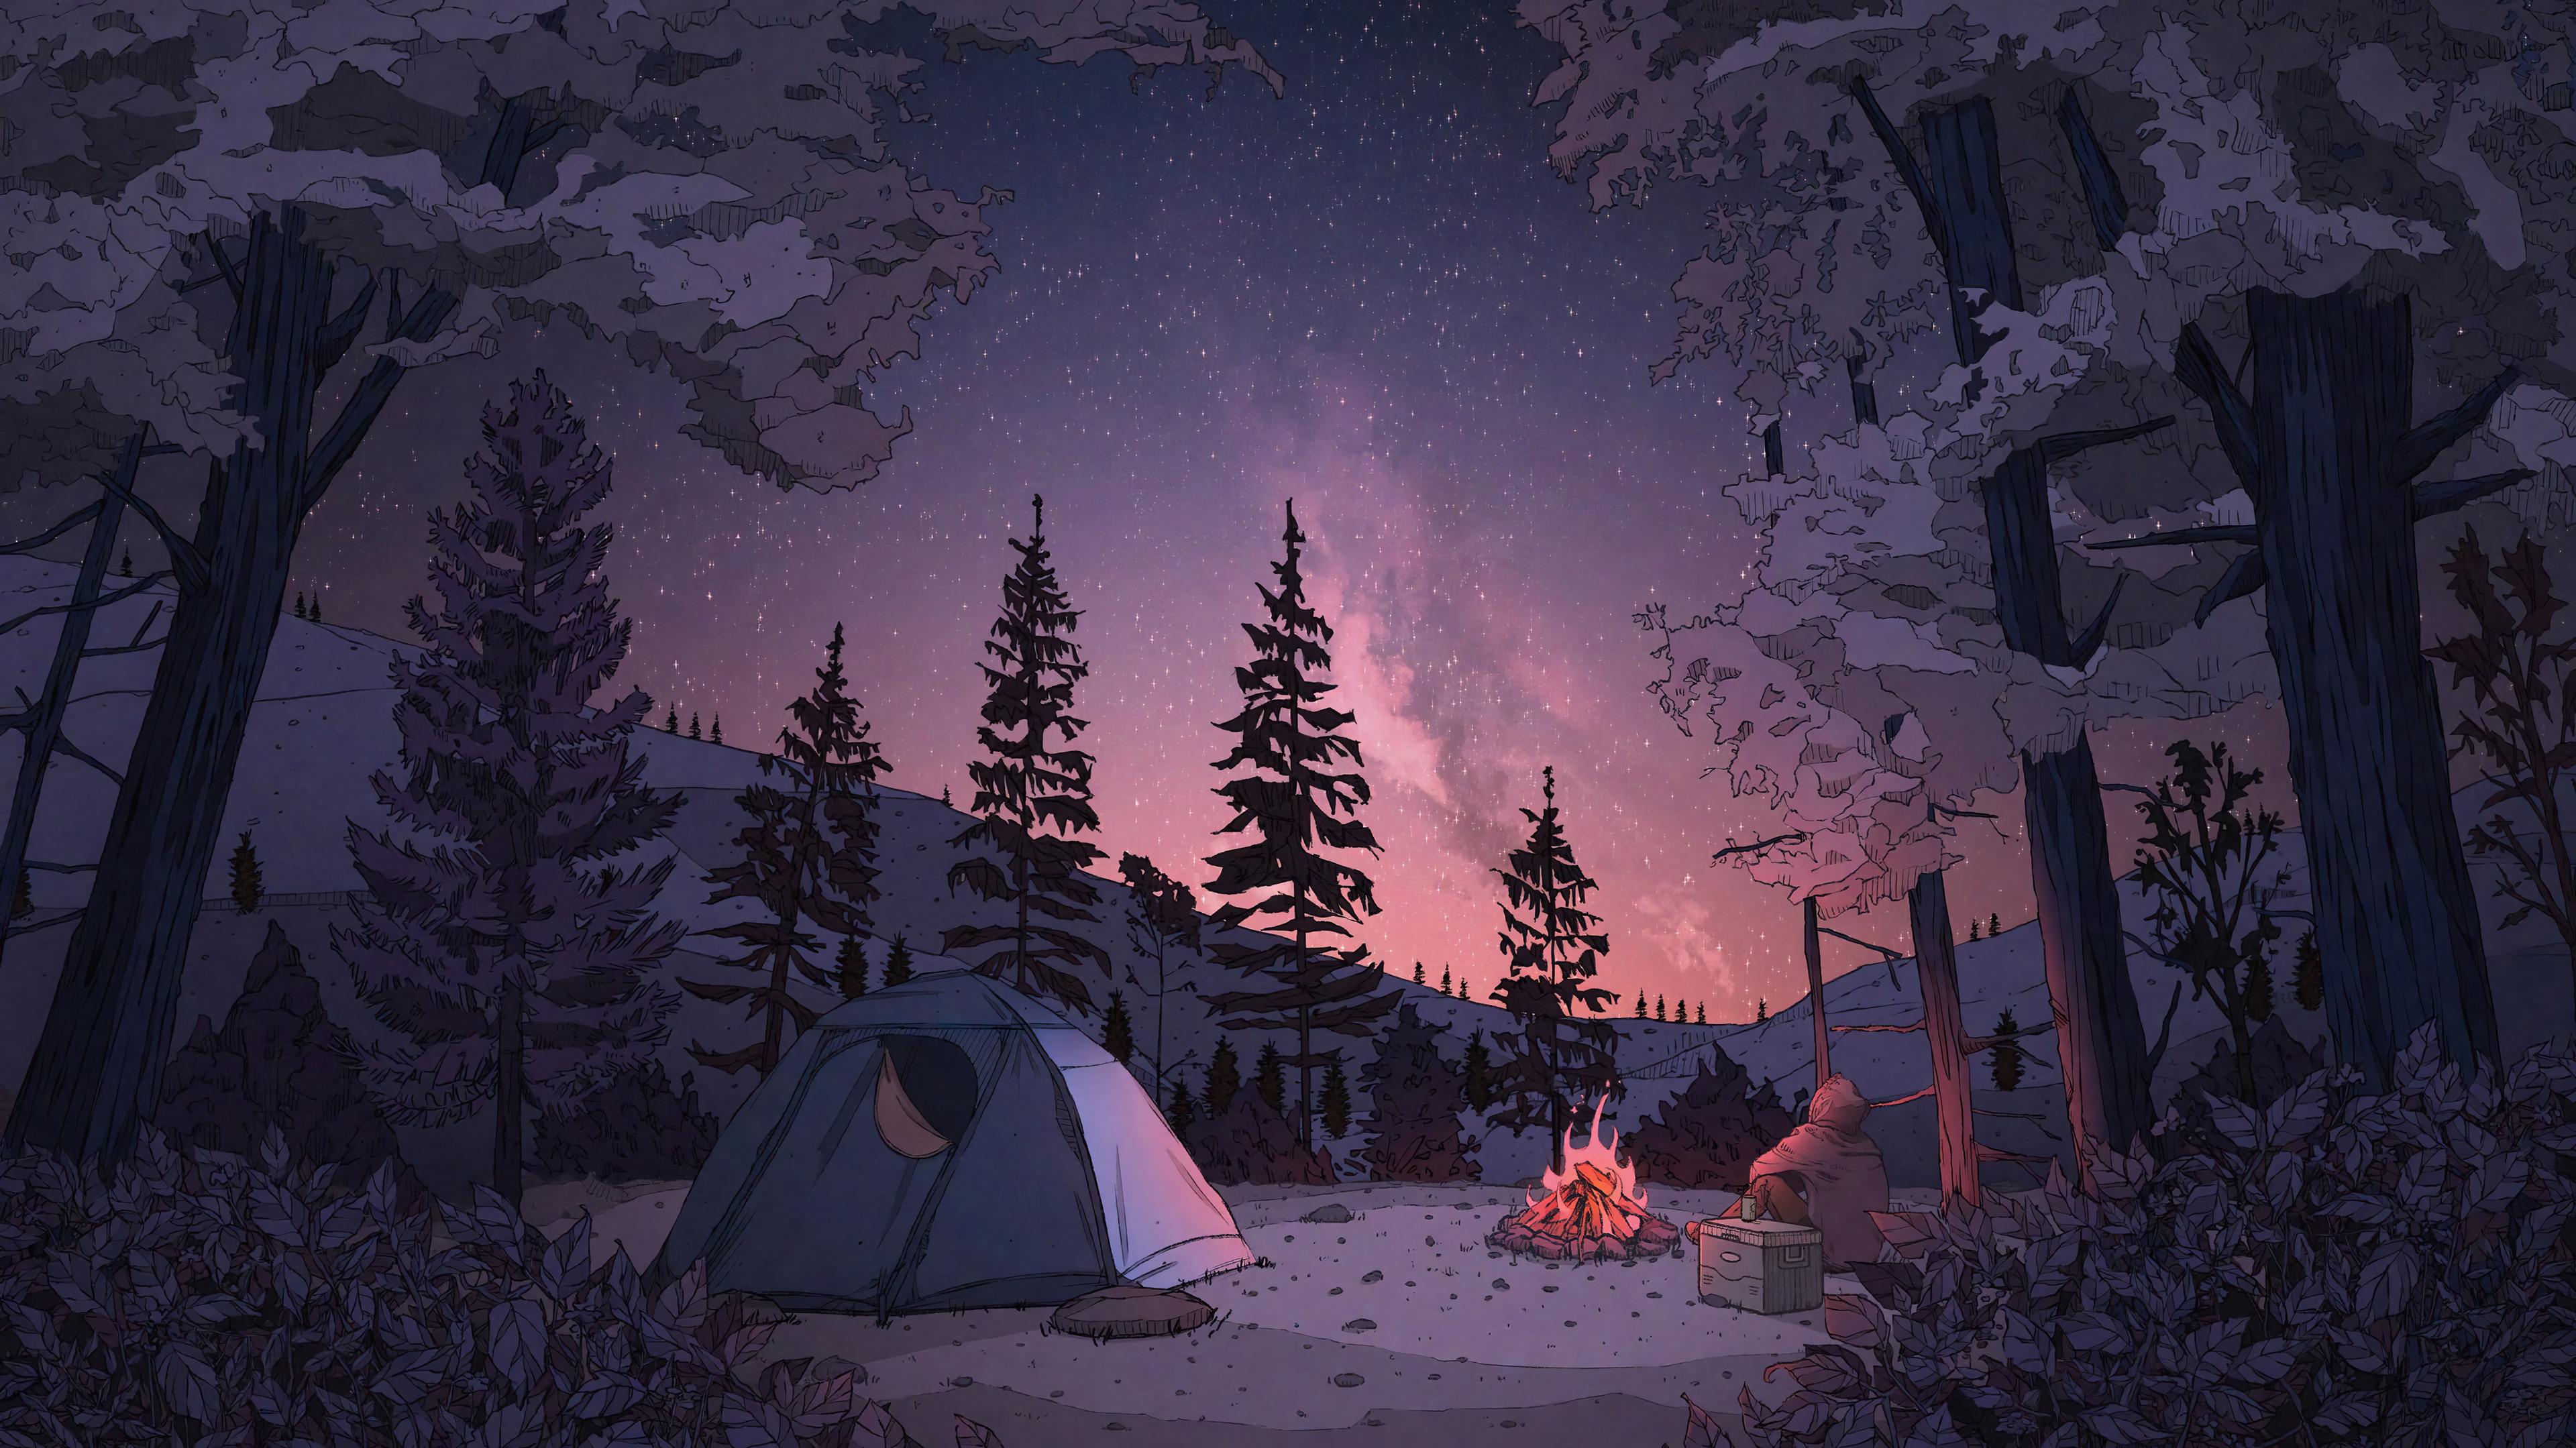 Camping Alone Bonfire Forest Tent Chillhop Lofi Scenery 4k